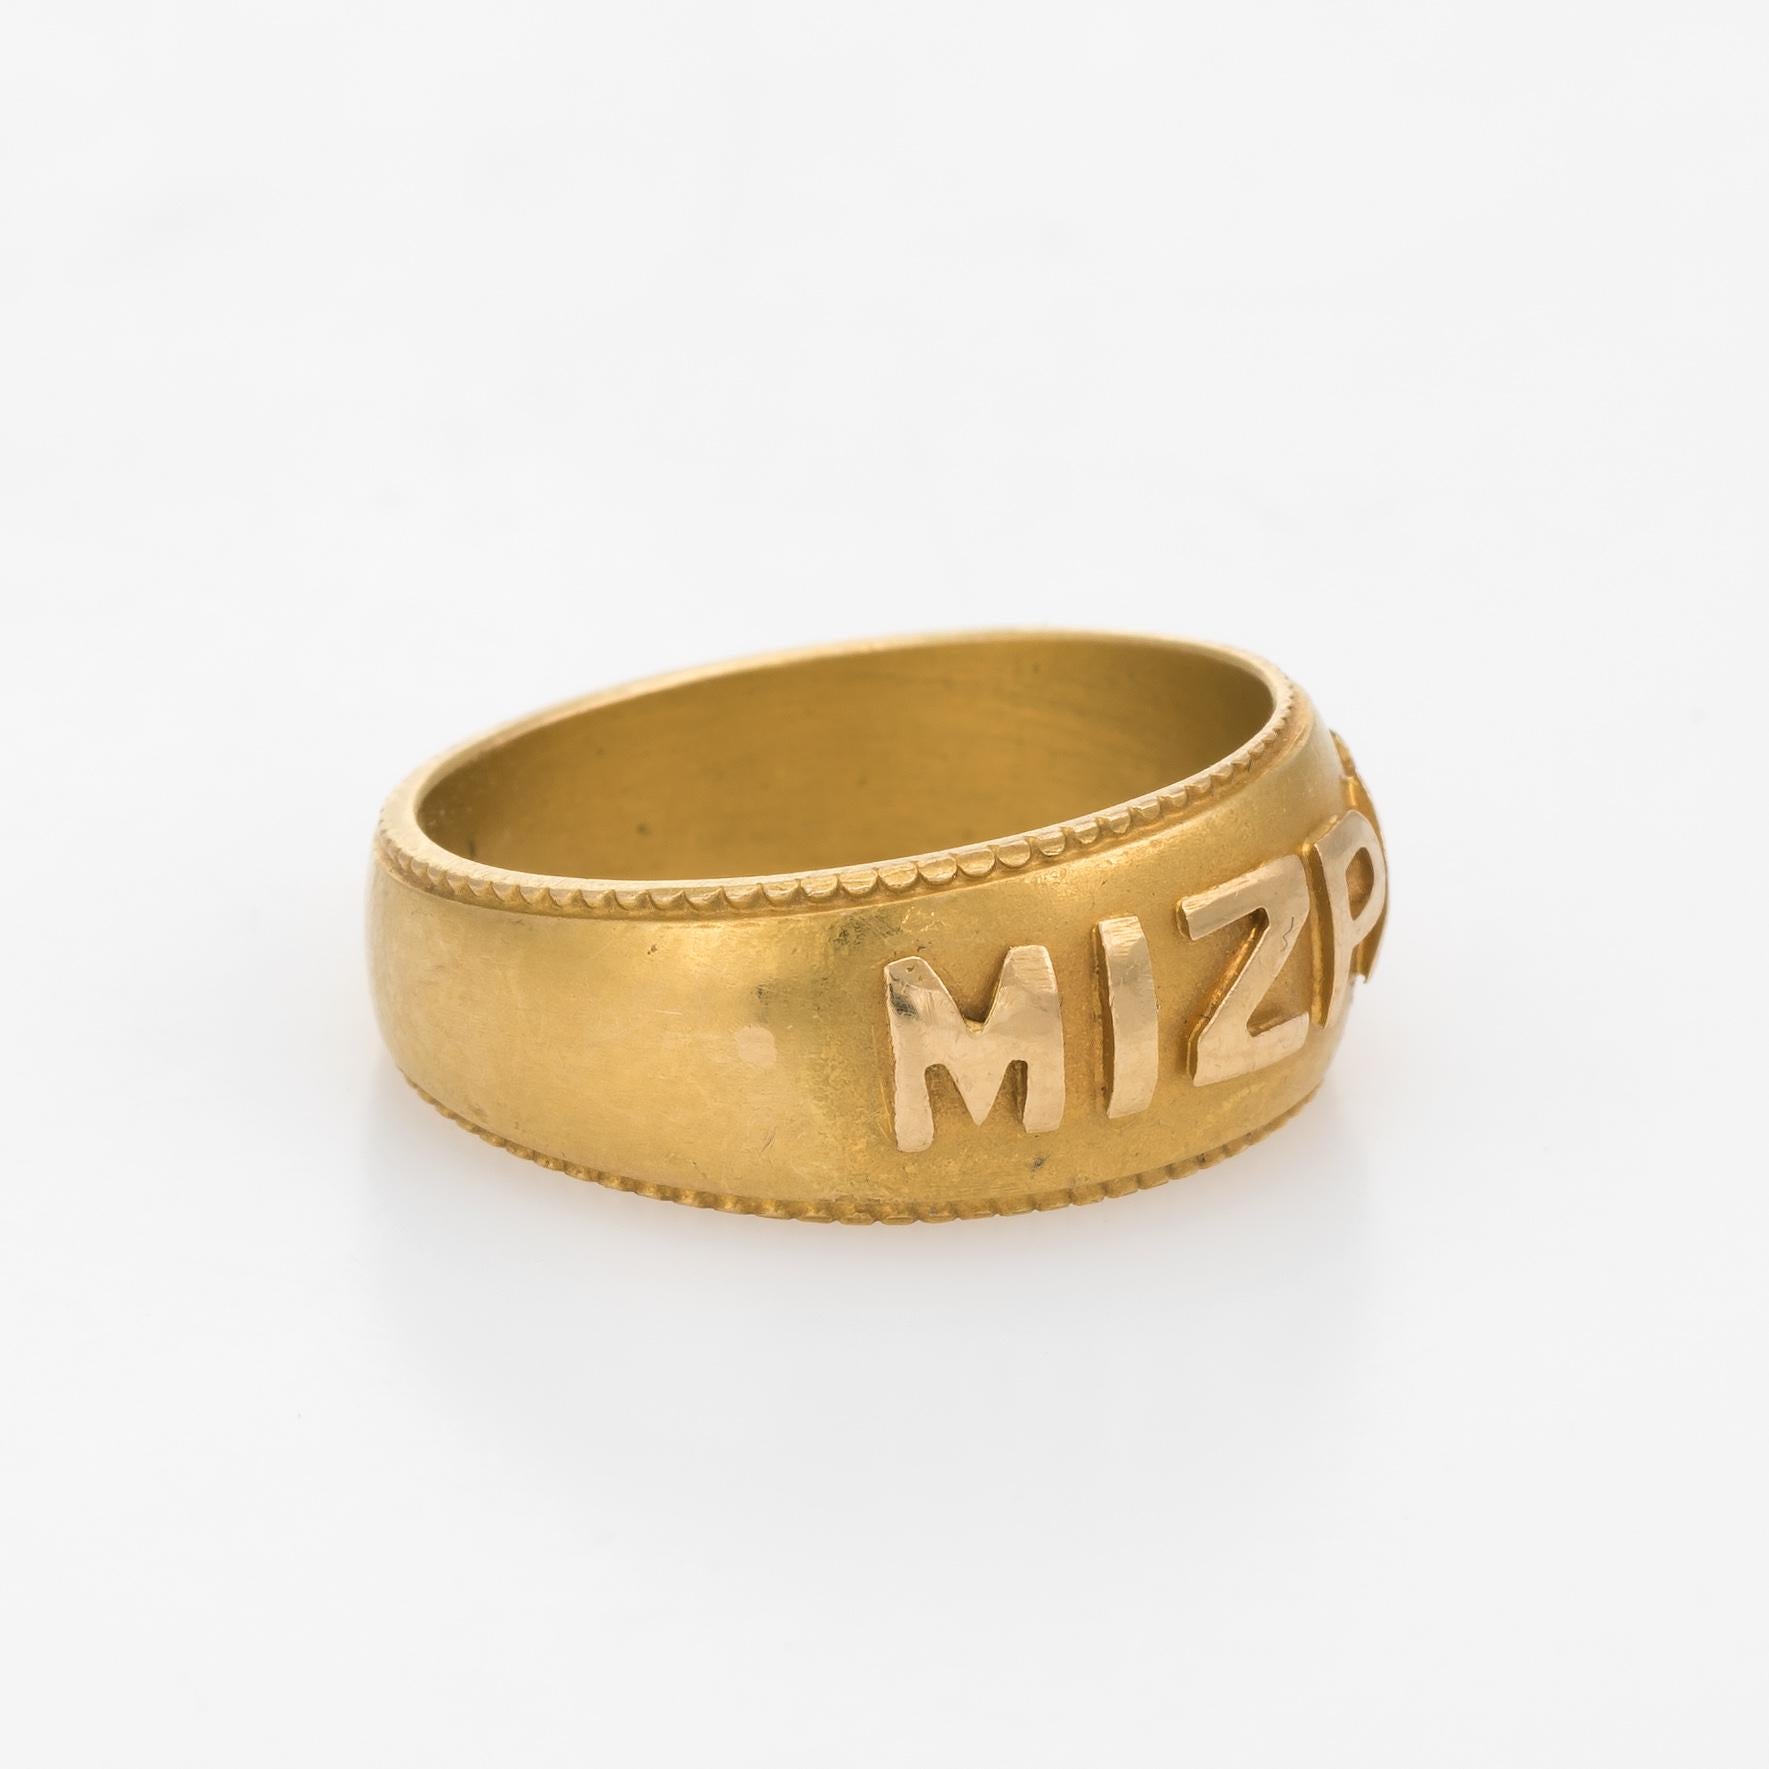 mizpah rings for sale